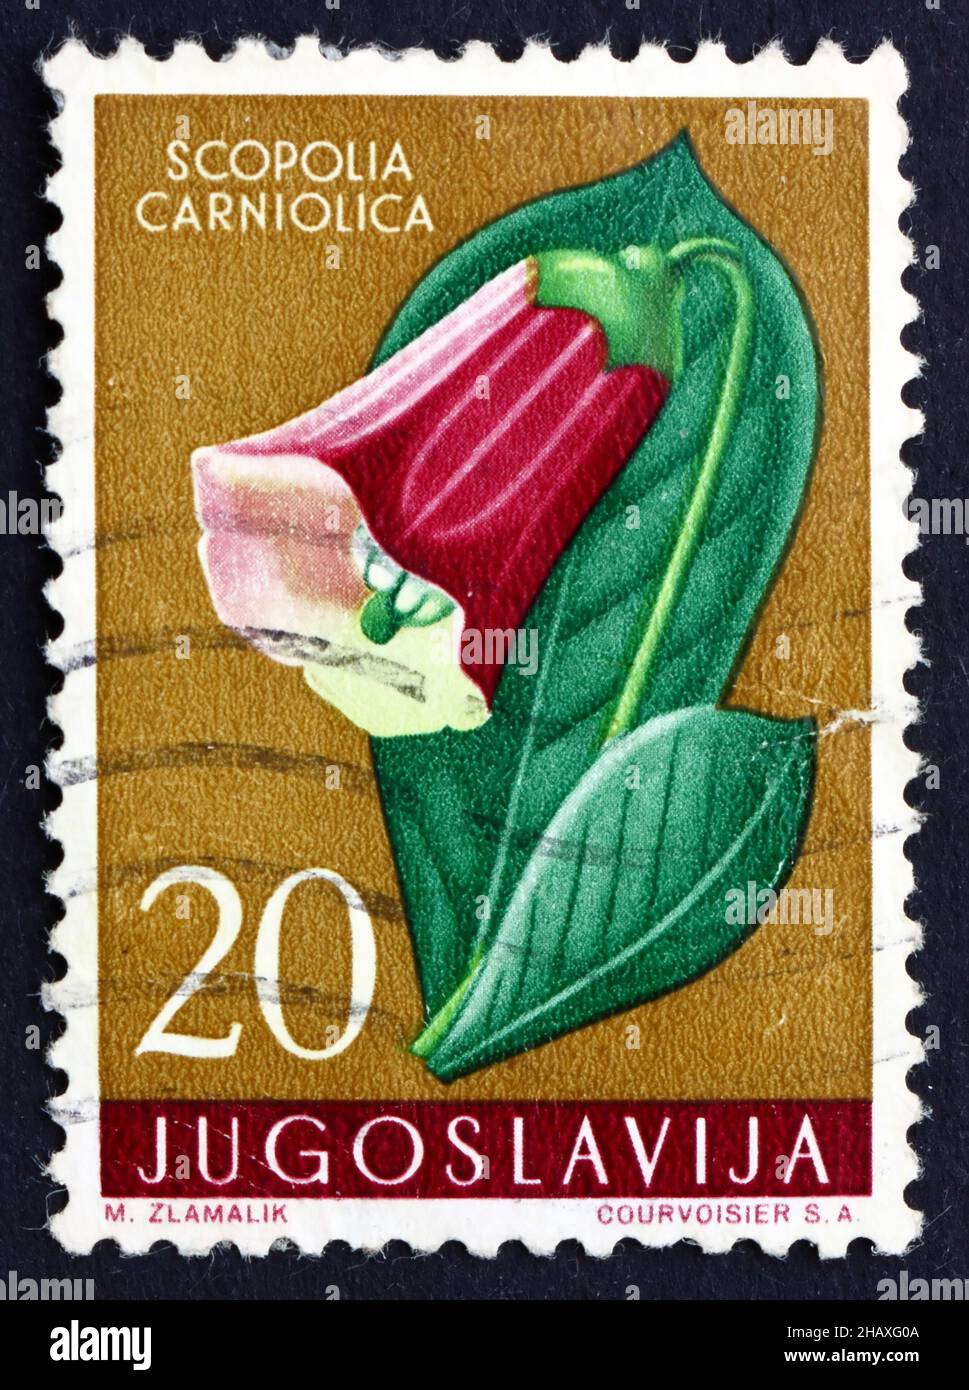 YUGOSLAVIA - CIRCA 1959: a stamp printed in the Yugoslavia shows Henbane Bell, Scopolia Carniolica, Poisonous Plant, circa 1959 Stock Photo